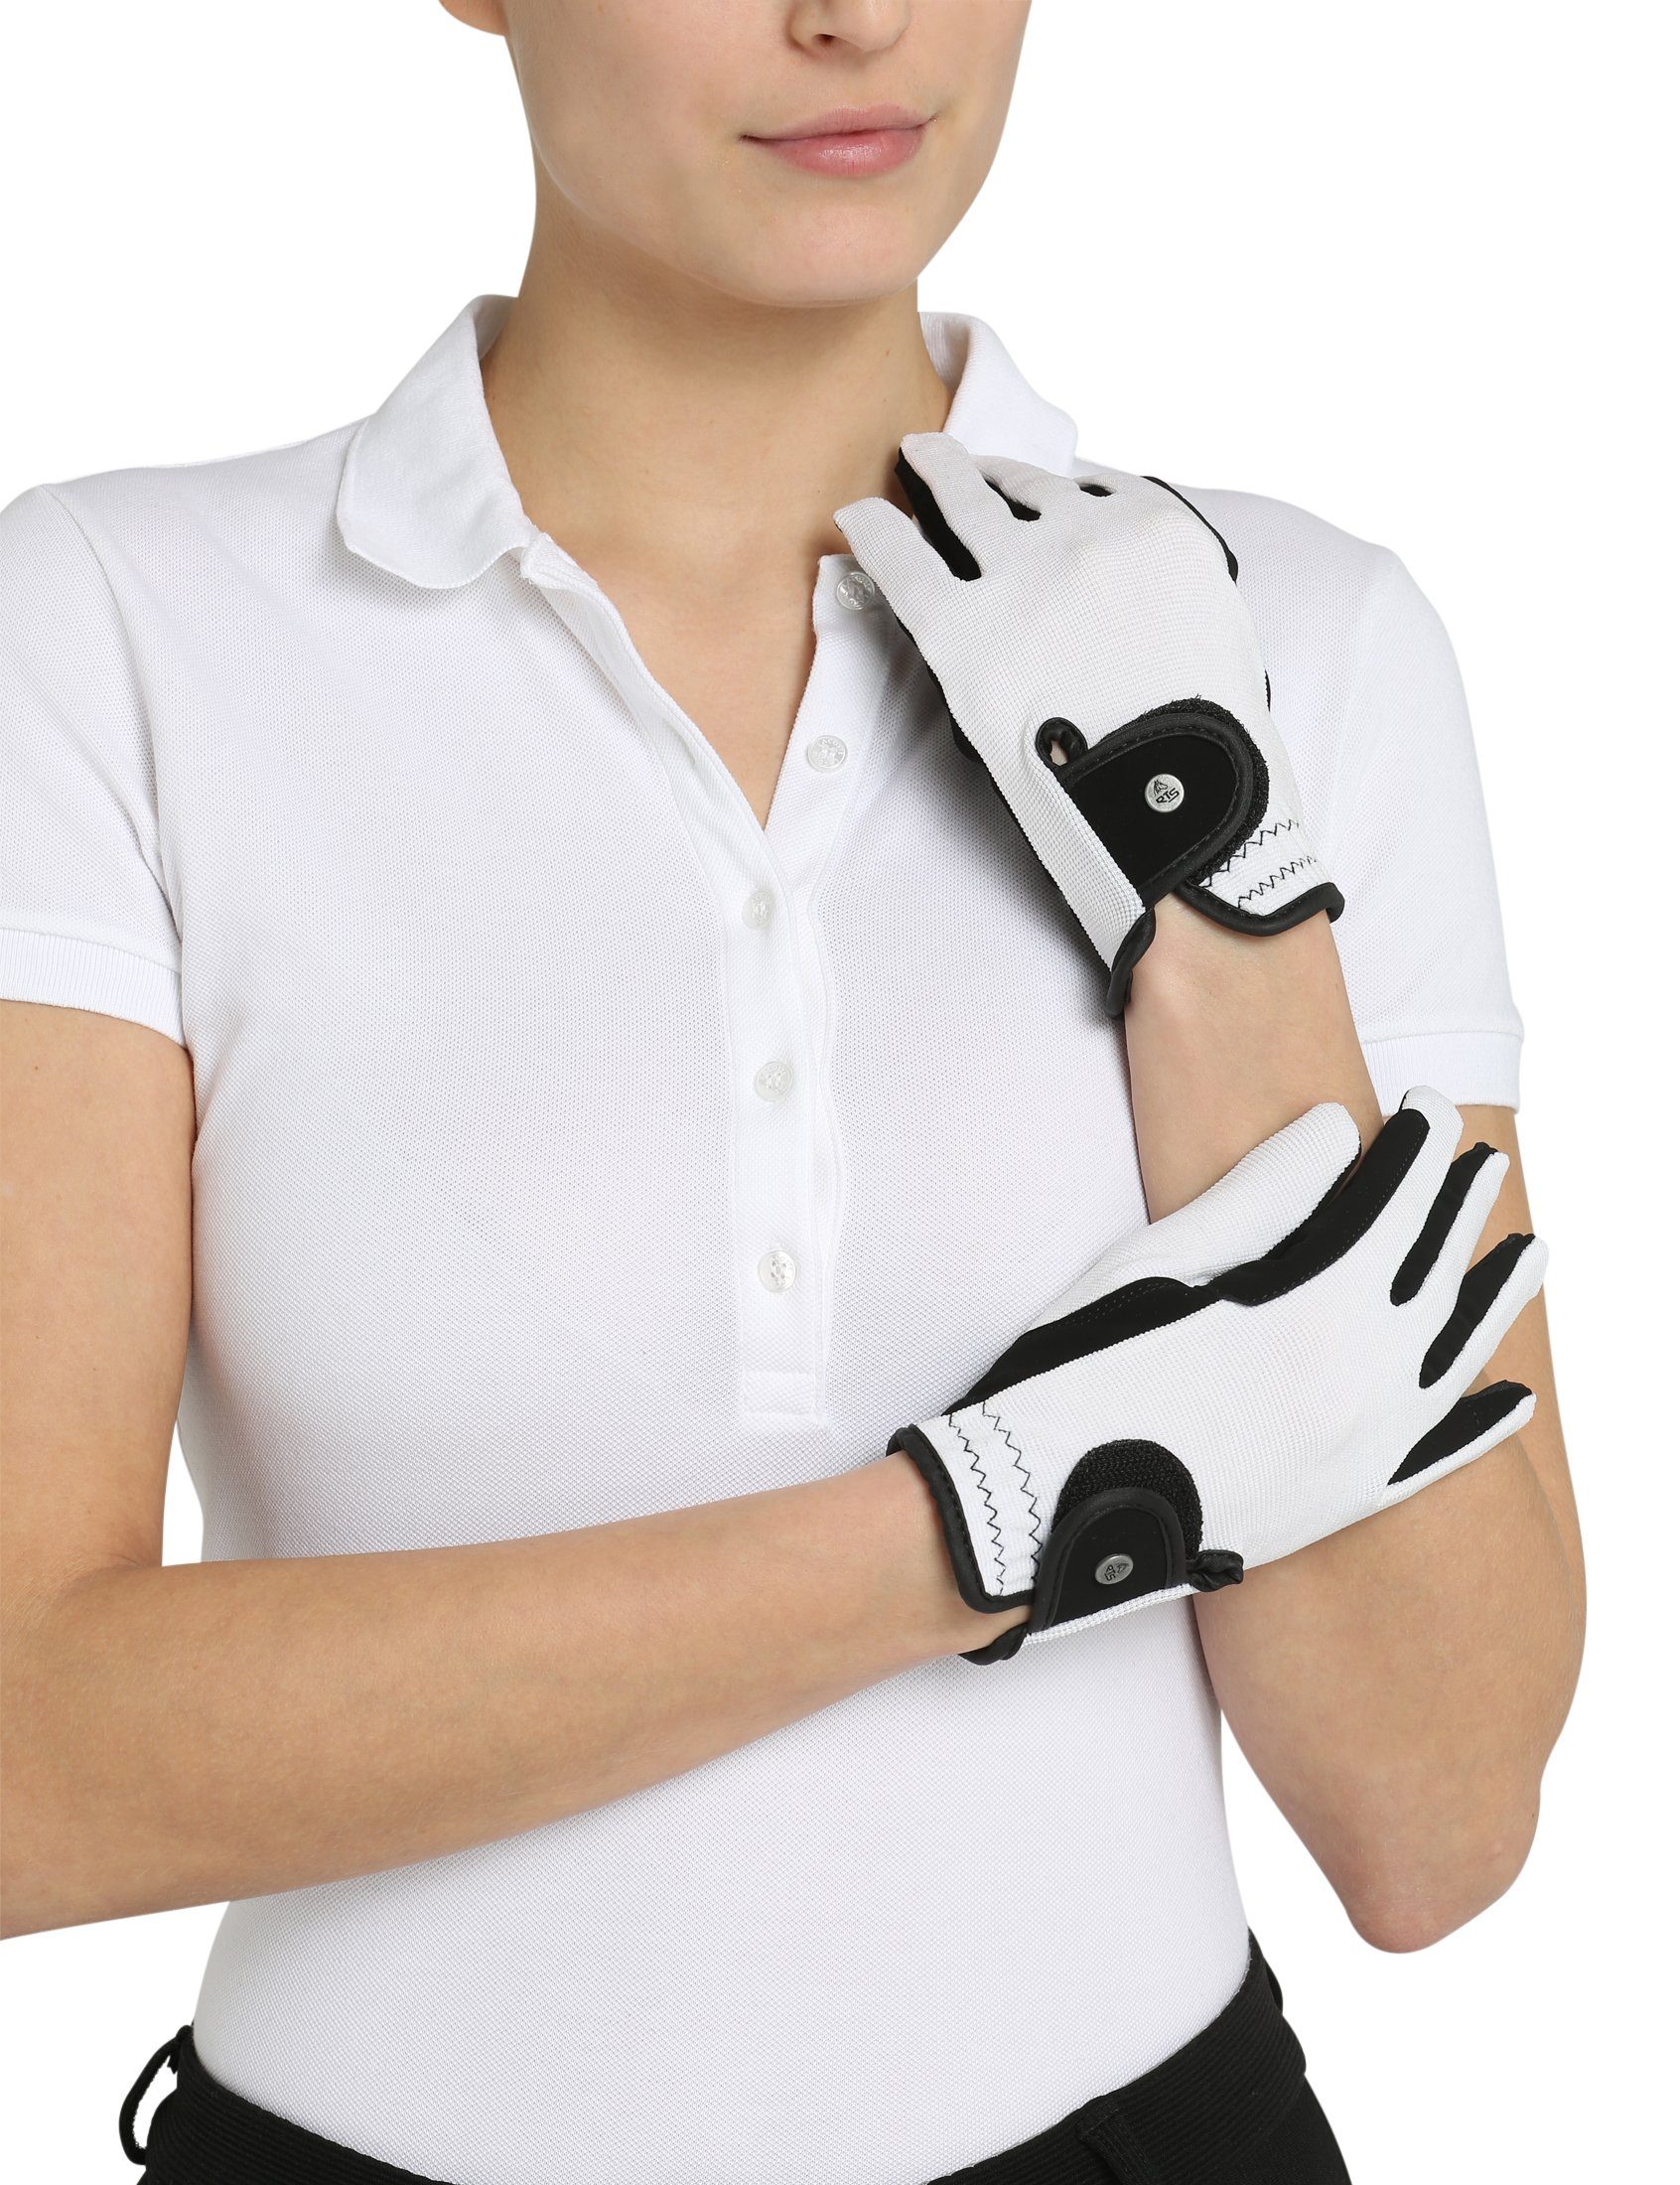 Fleecehandschuhe material REIT is Gloves Zoomyo the Schwarz/Weiß Handschuhe Damen thin pleasantly